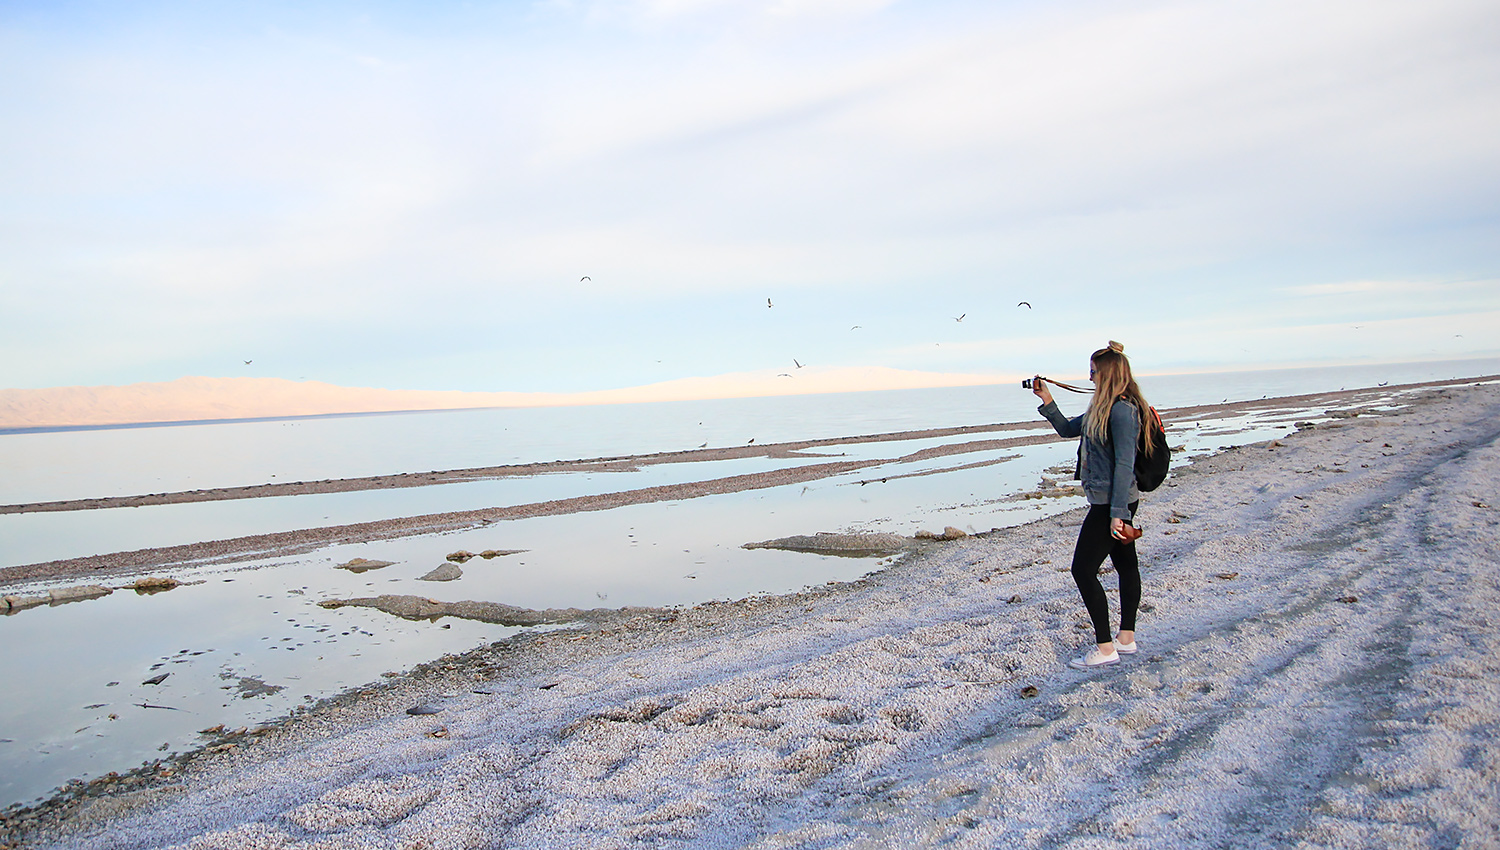 California’s Largest Lake: The Salton Sea